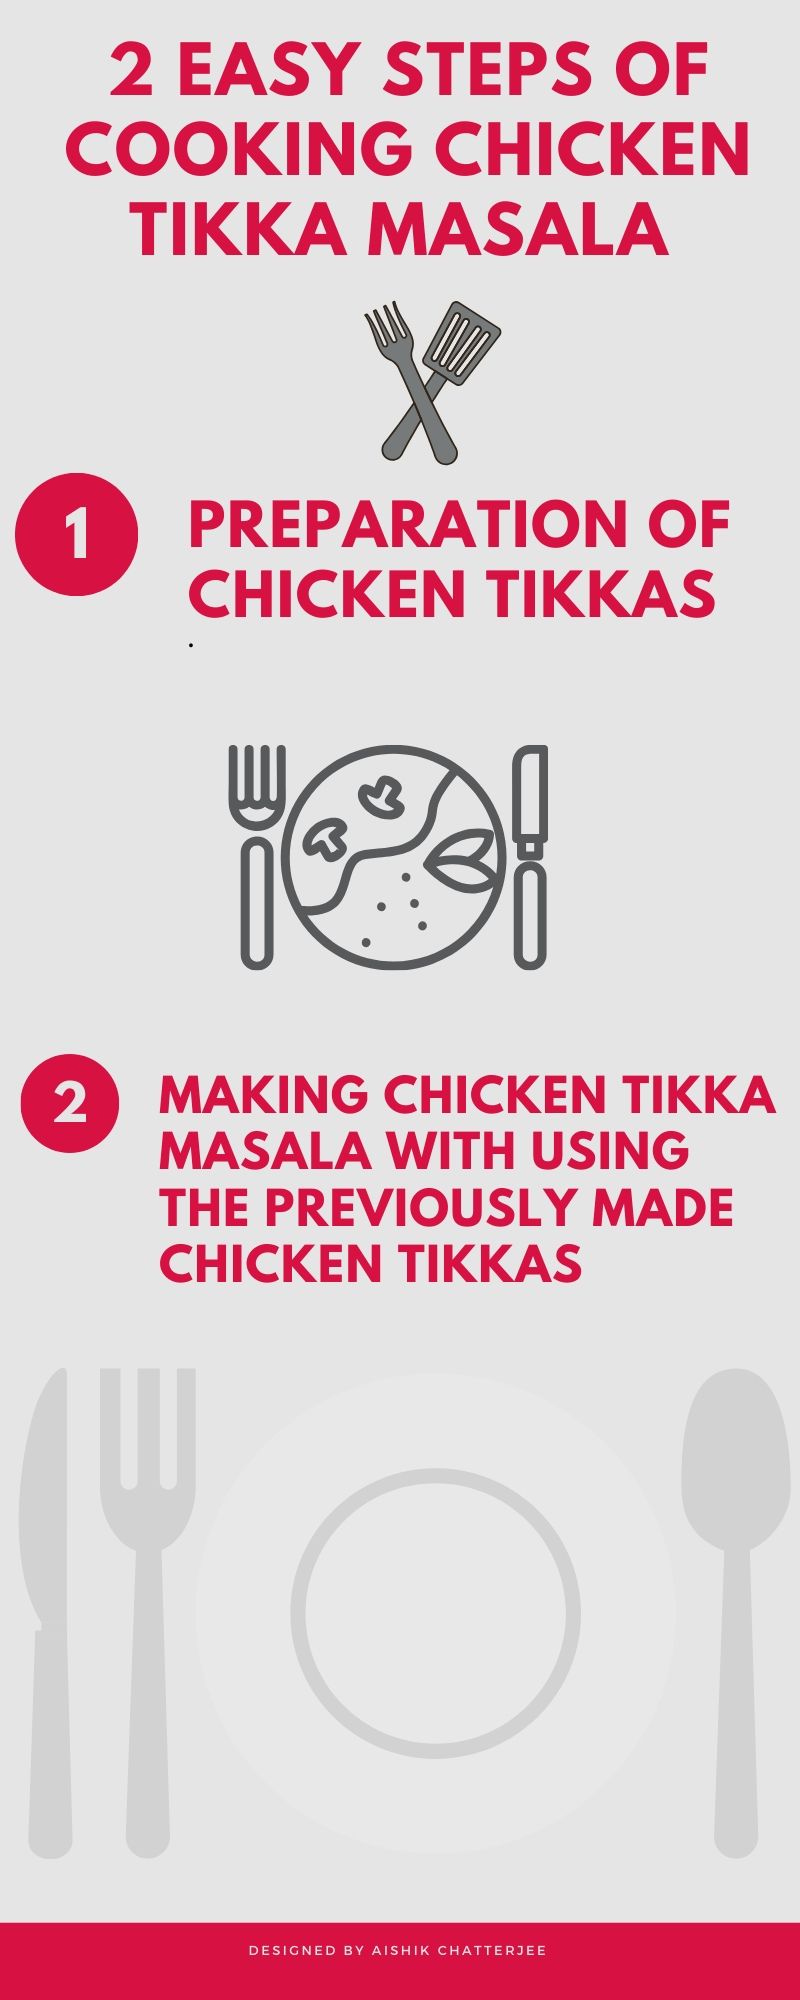 Steps of Cooking Chicken Tikka Masala 